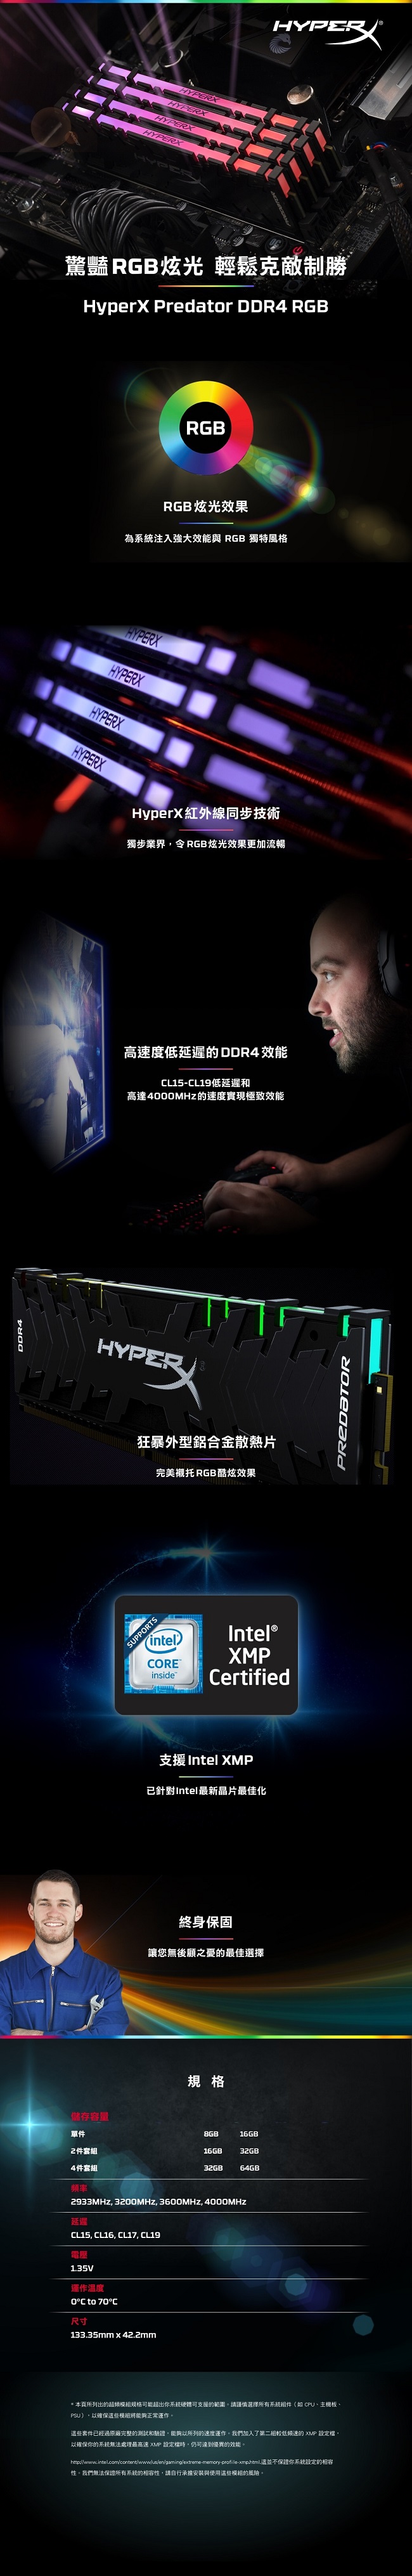 HyperX Predator RGB DDR4 3200 8GBx2 桌上型超頻記憶體